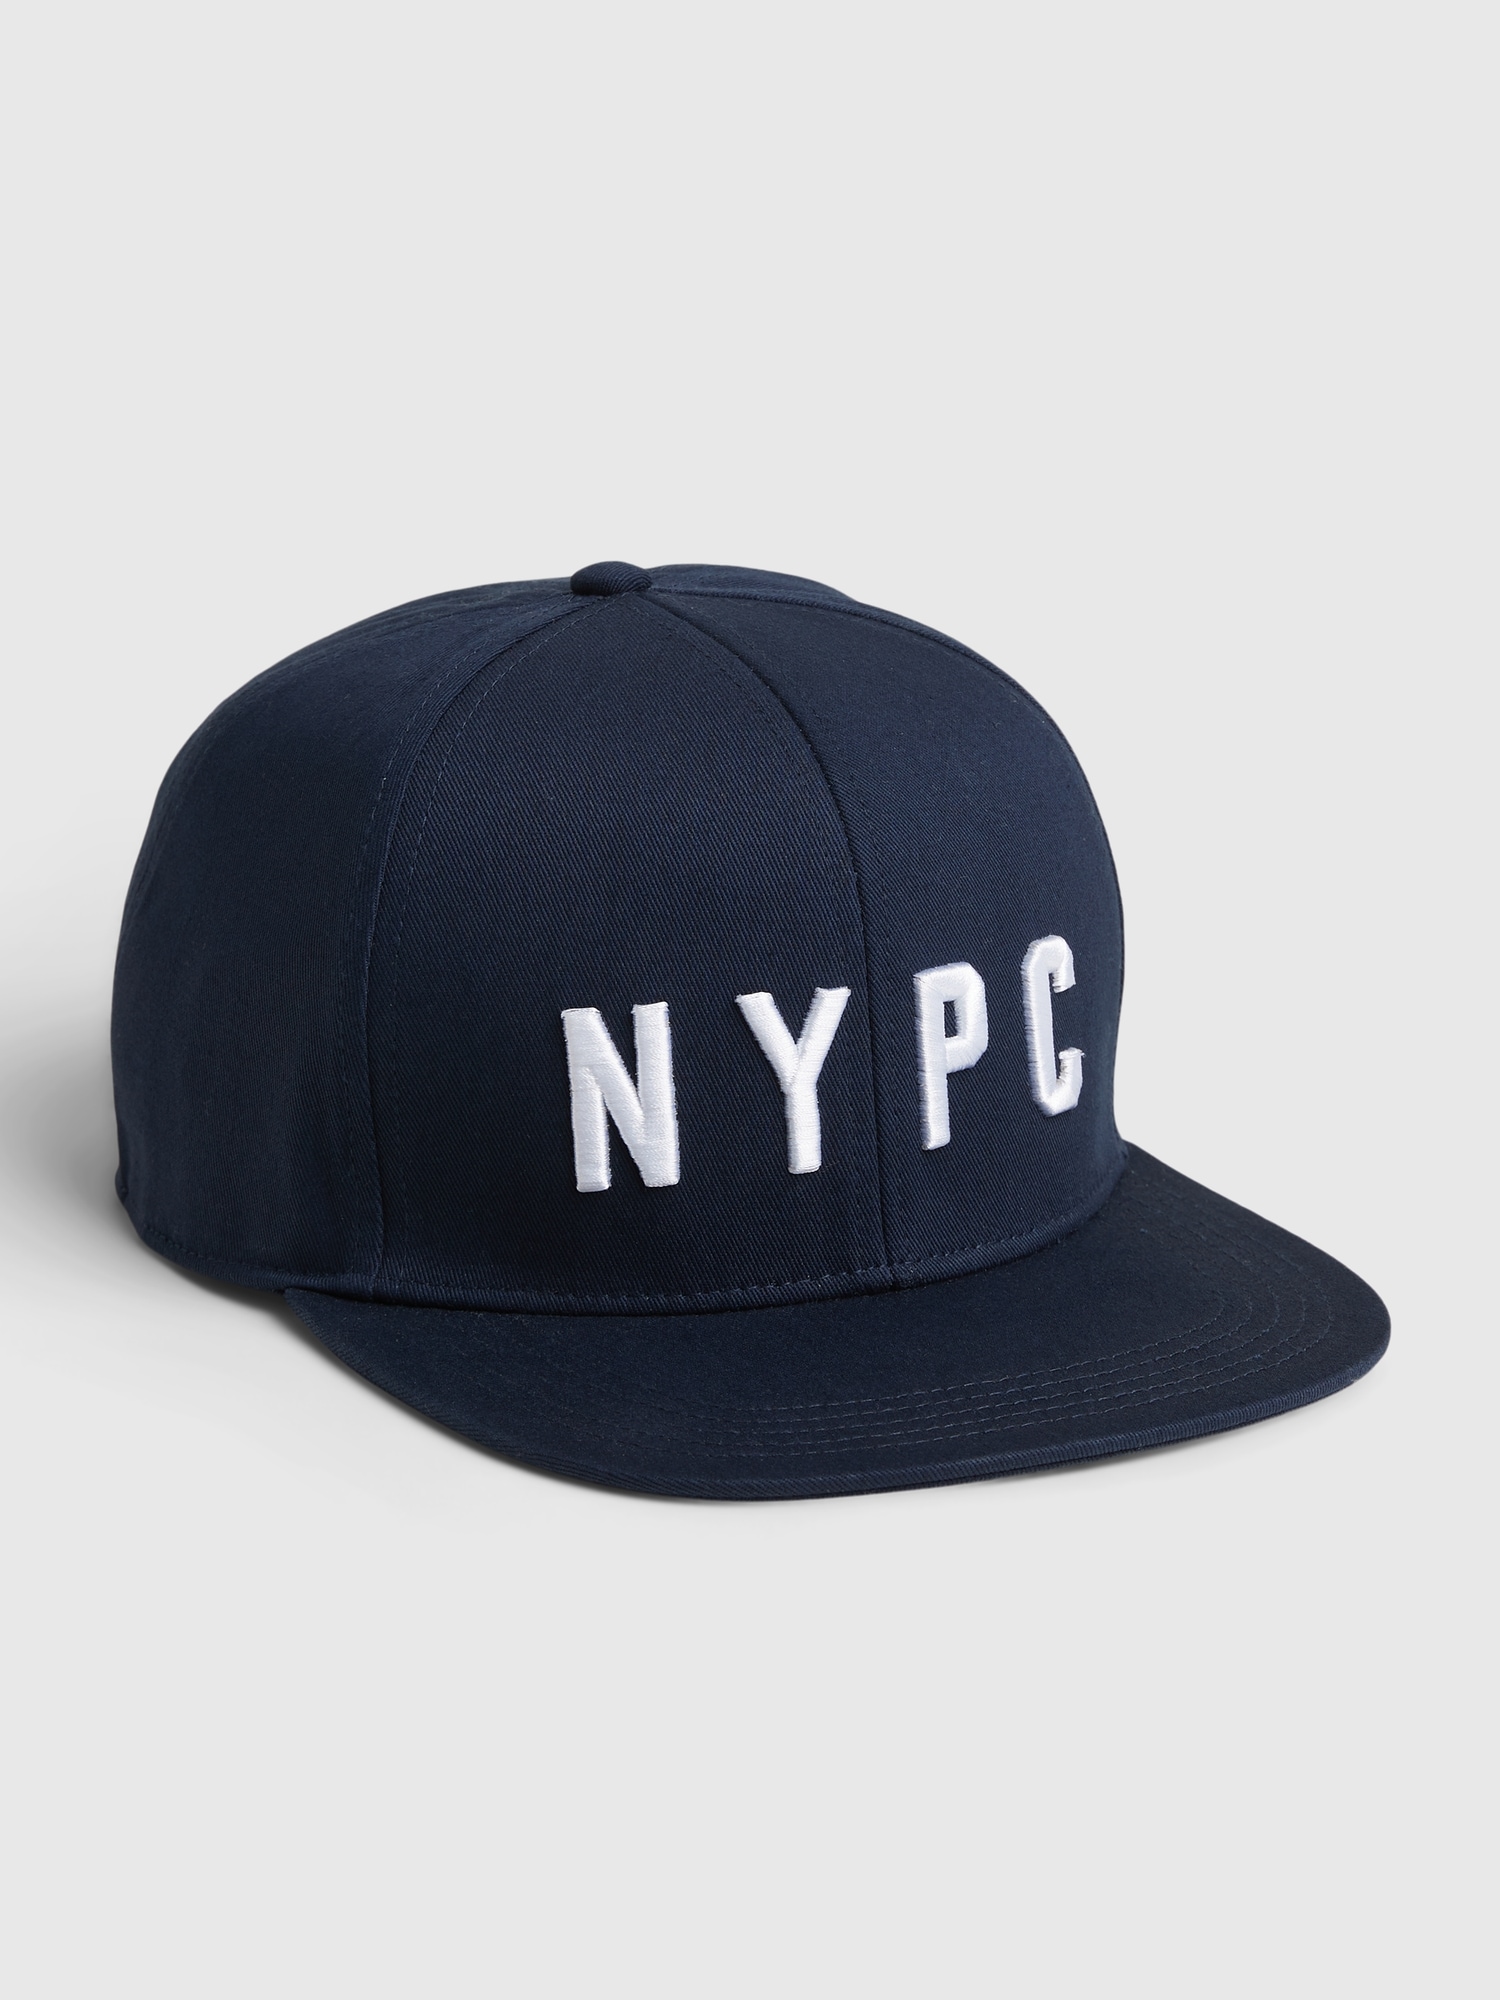 Gap x New York Pioneer Club Snapback Hat | Gap